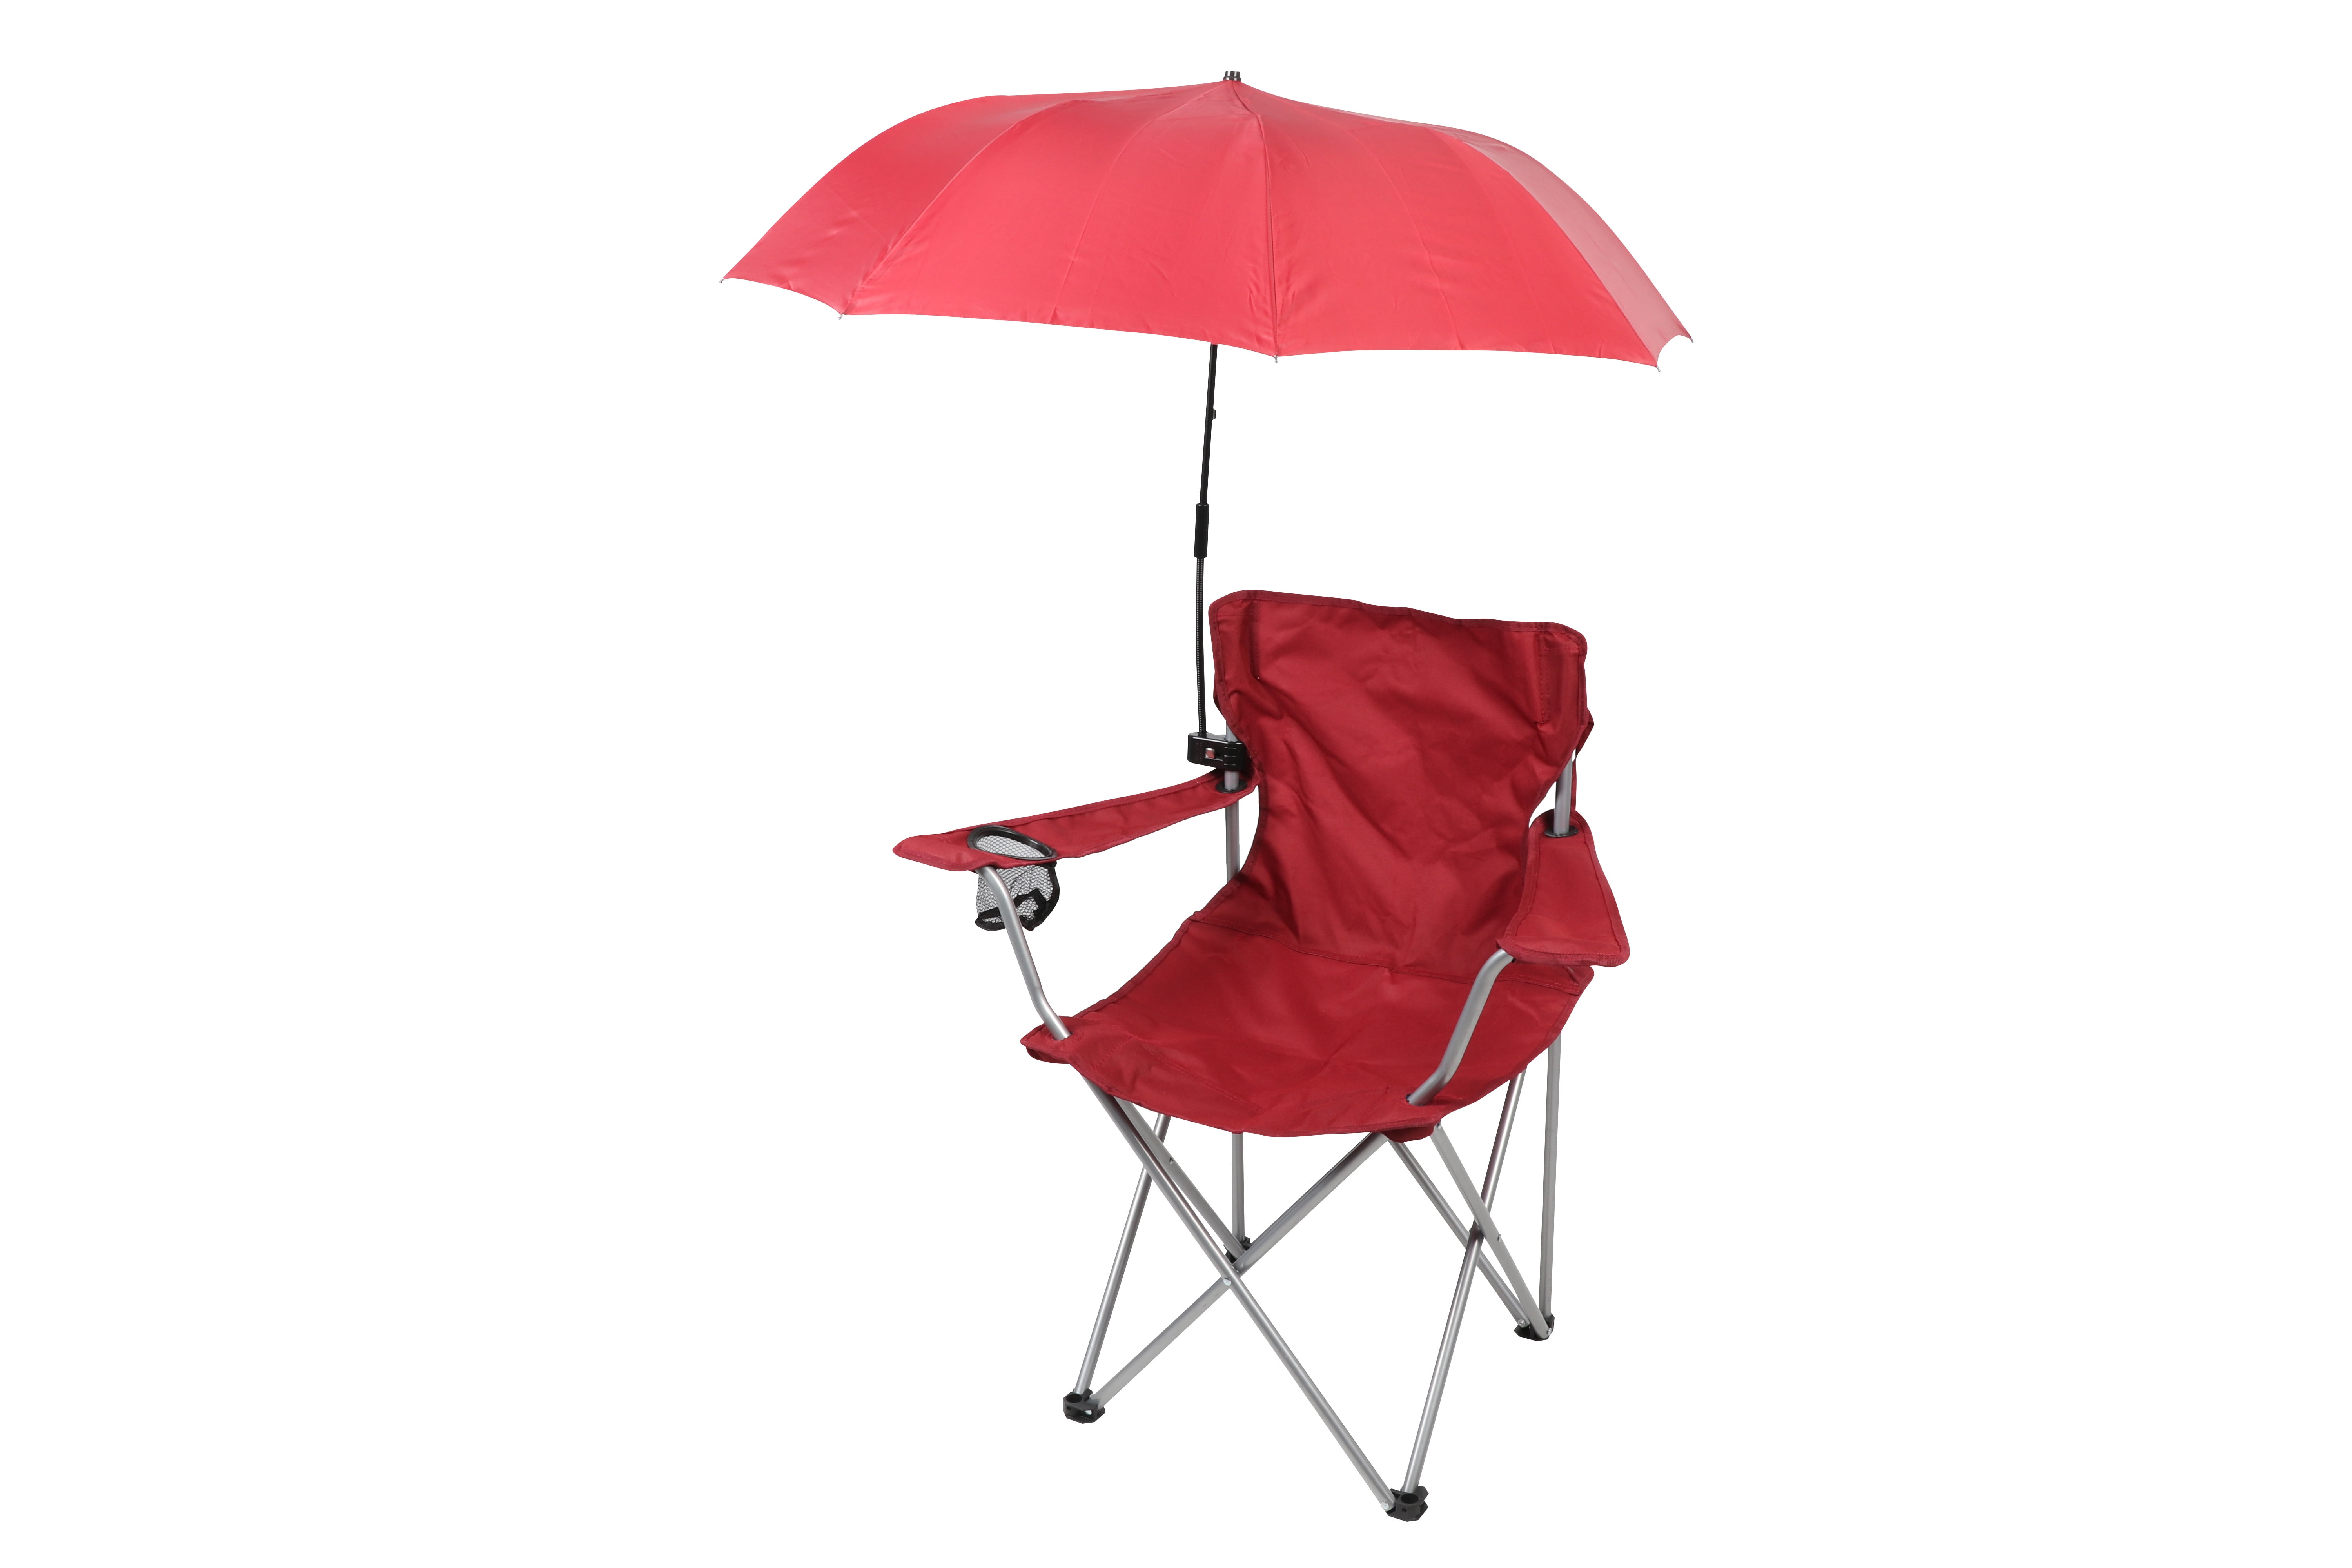 Chair Umbrella Clamp On Sun Shade for Camping Stroller Wheelchair Picnic Beach 